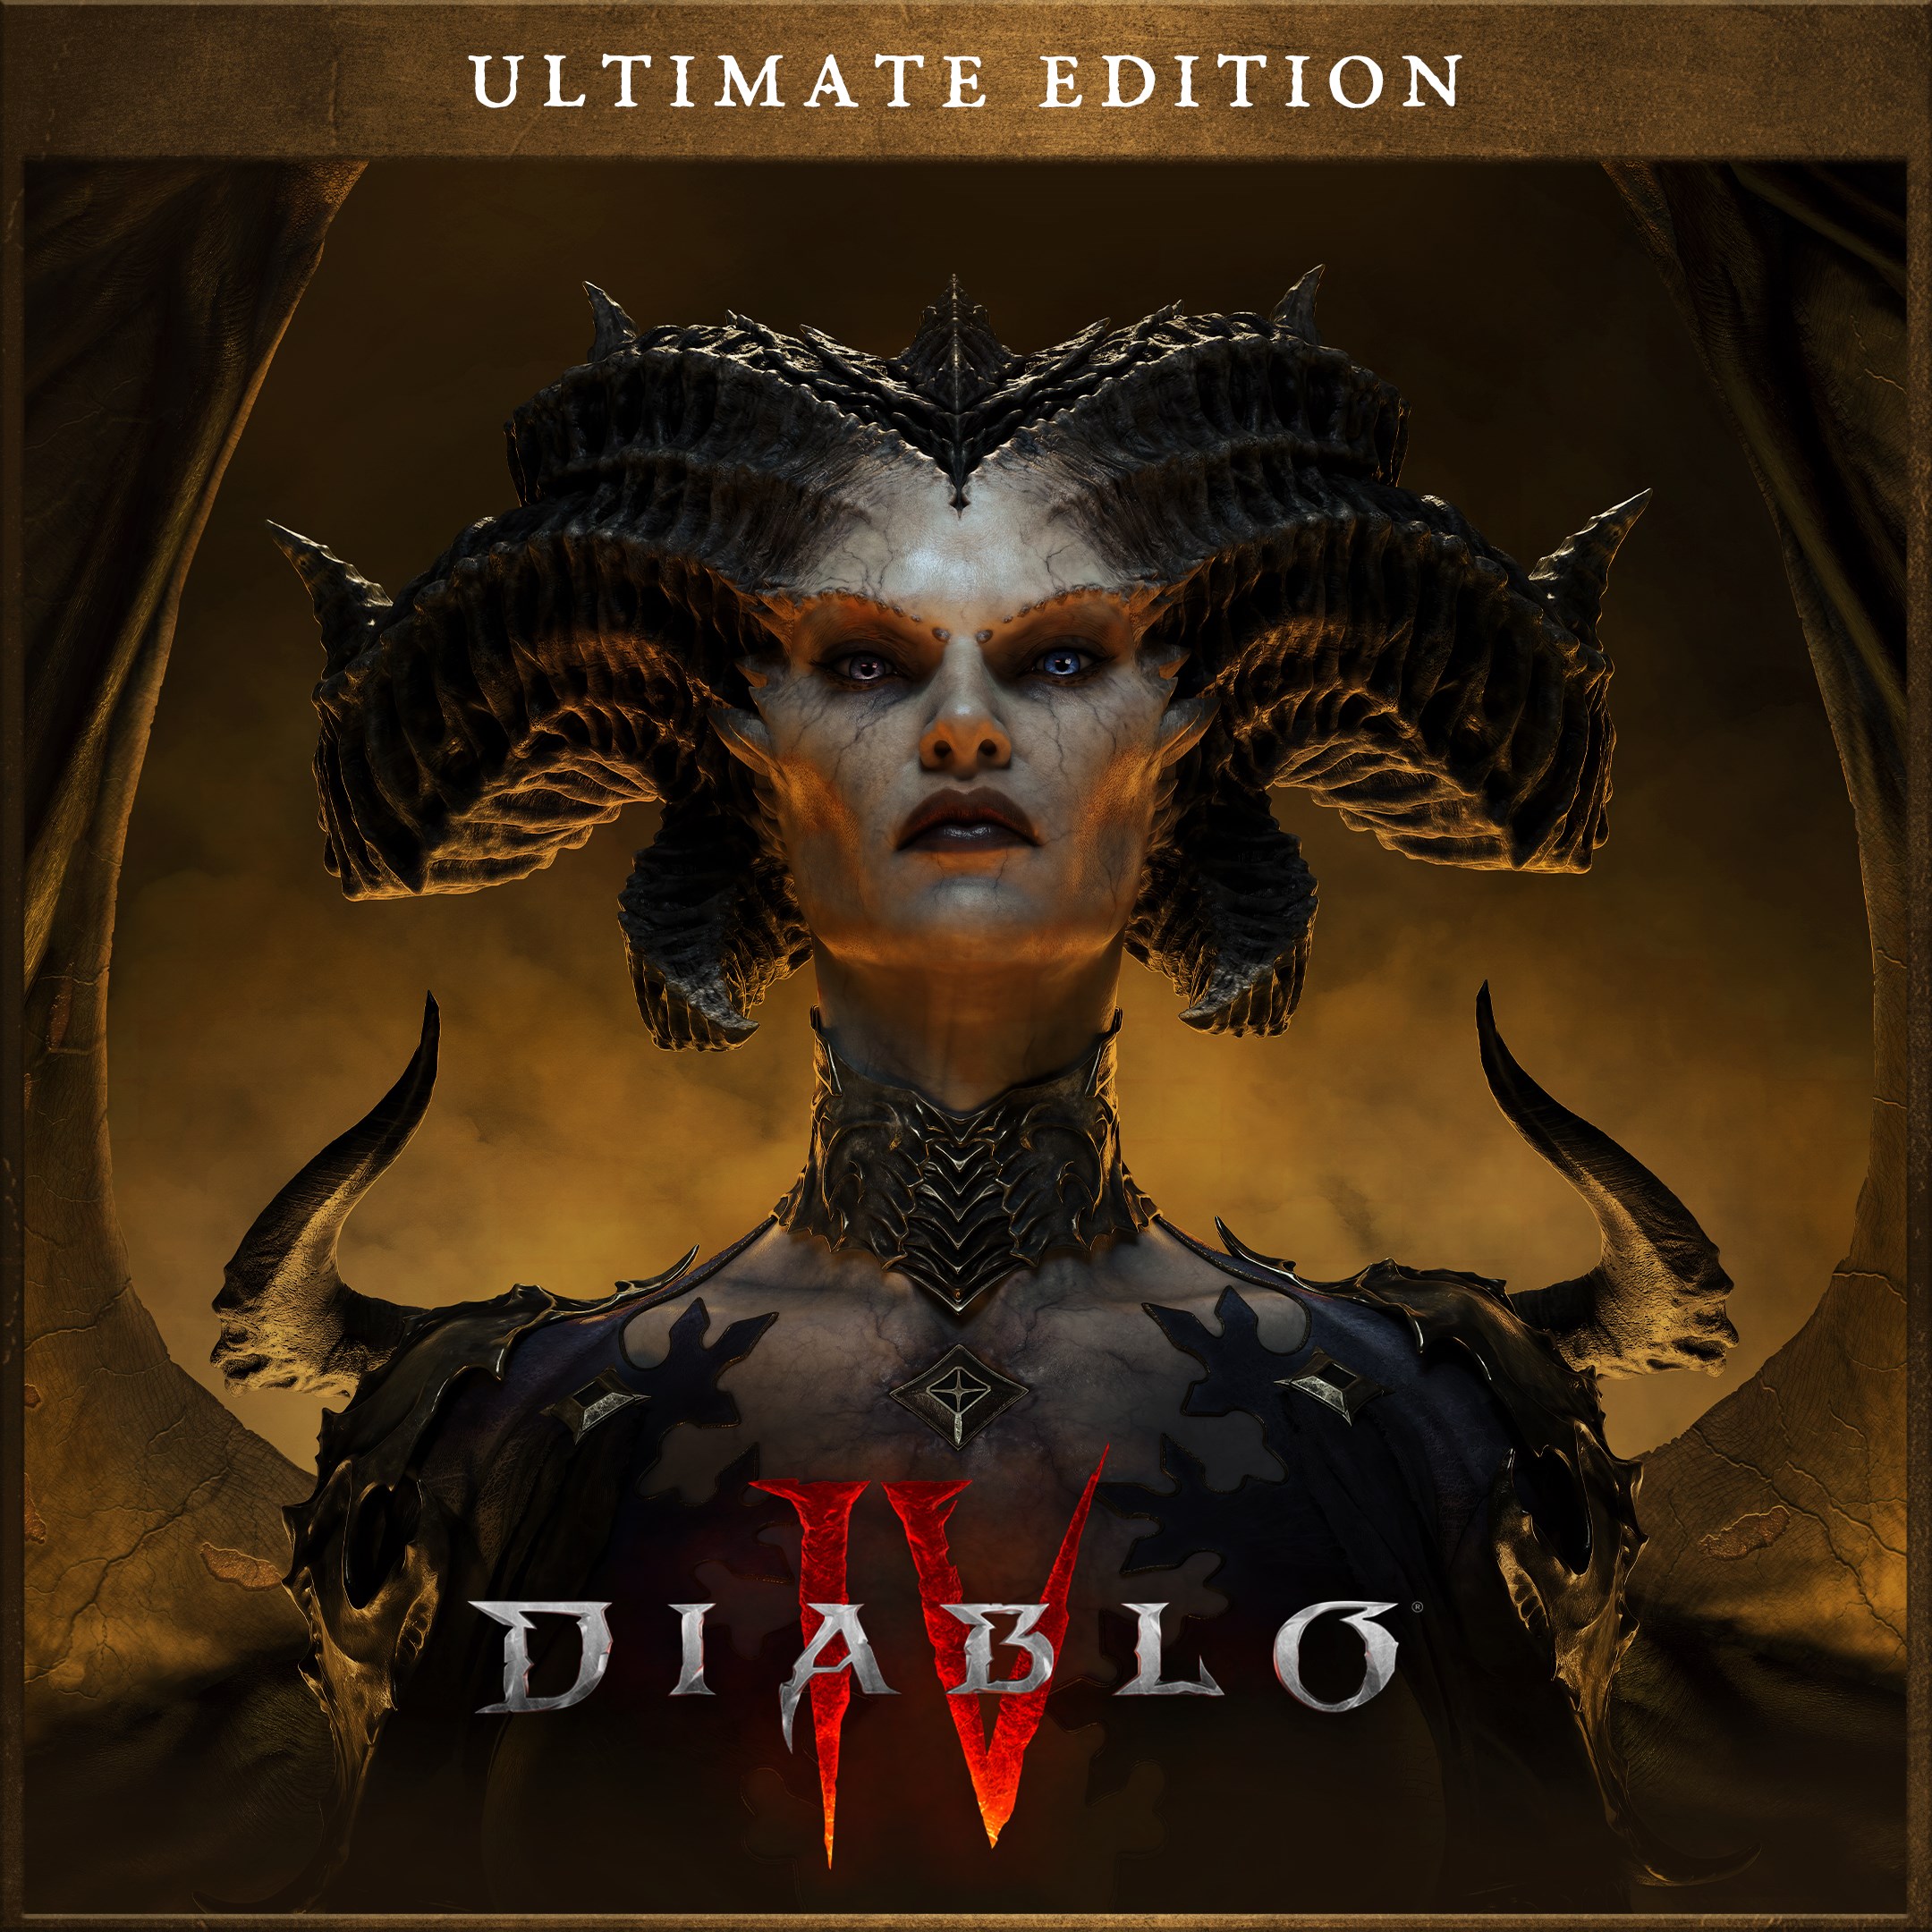 Diablo® IV - Ultimate Edition Content